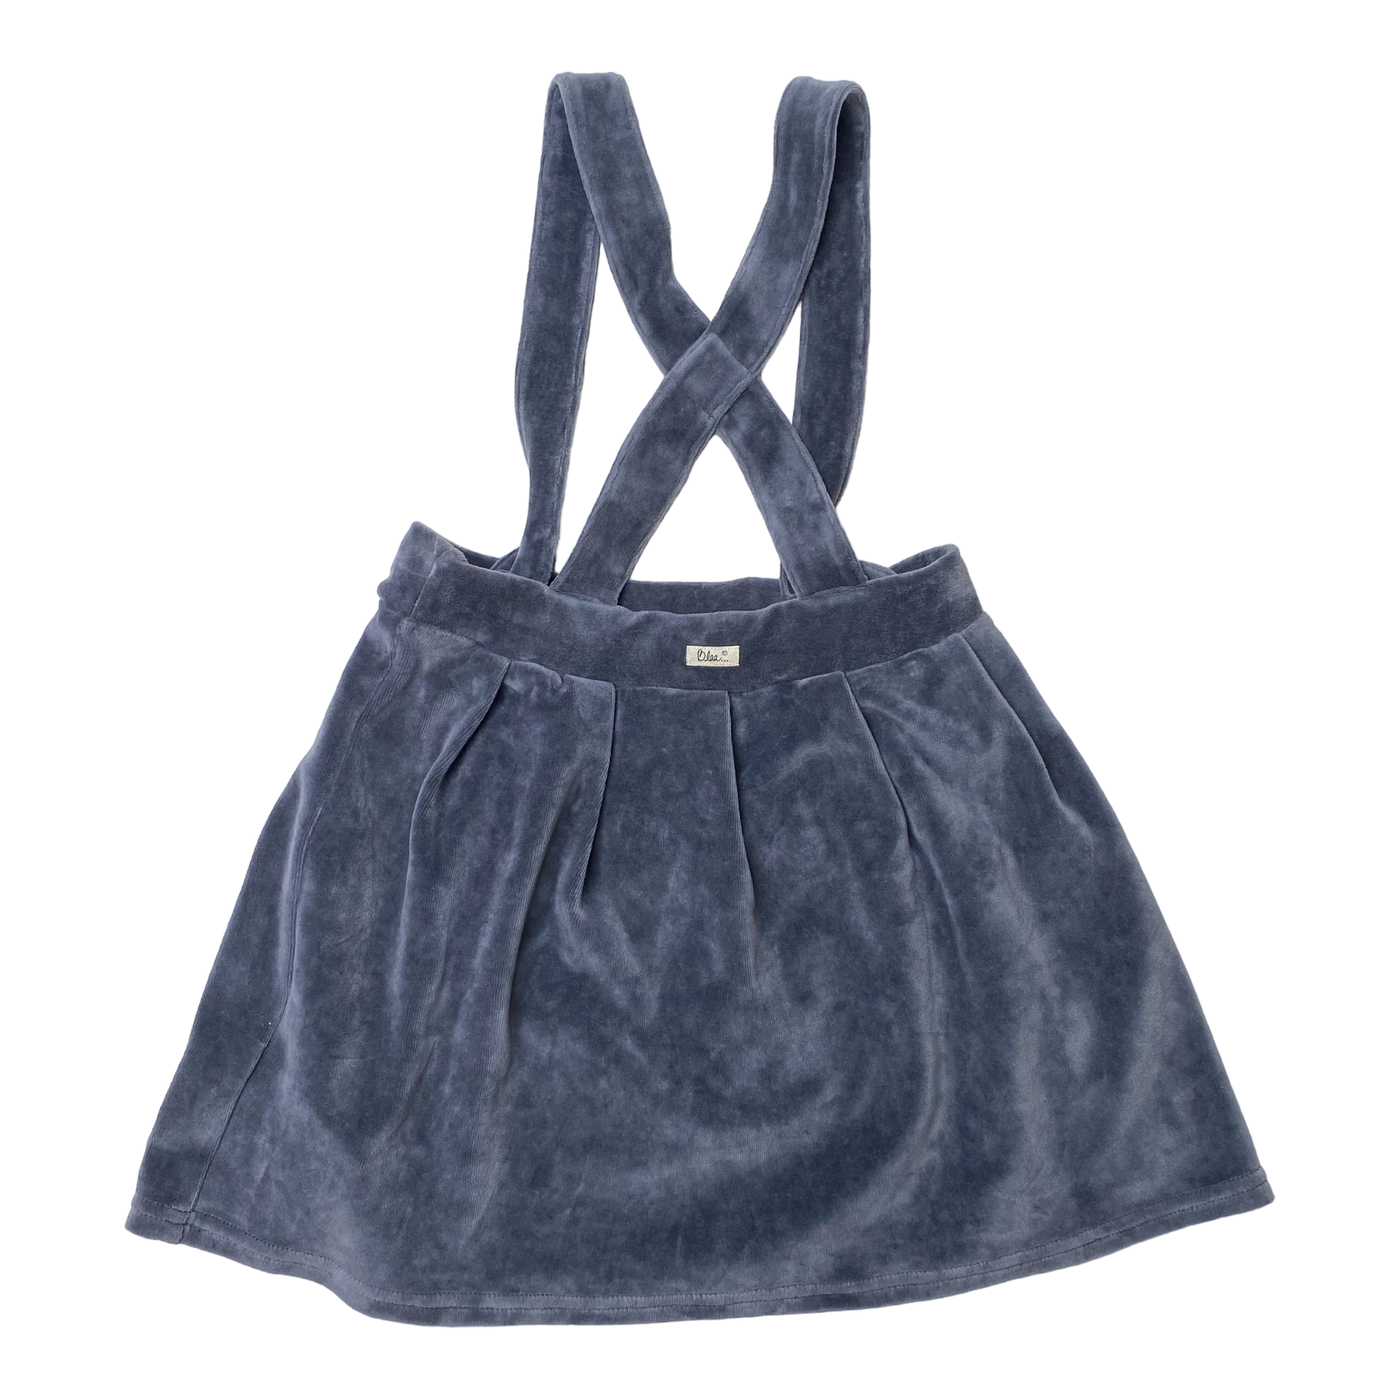 Blaa dungaree velour skirt, stone grey | 110/116cm